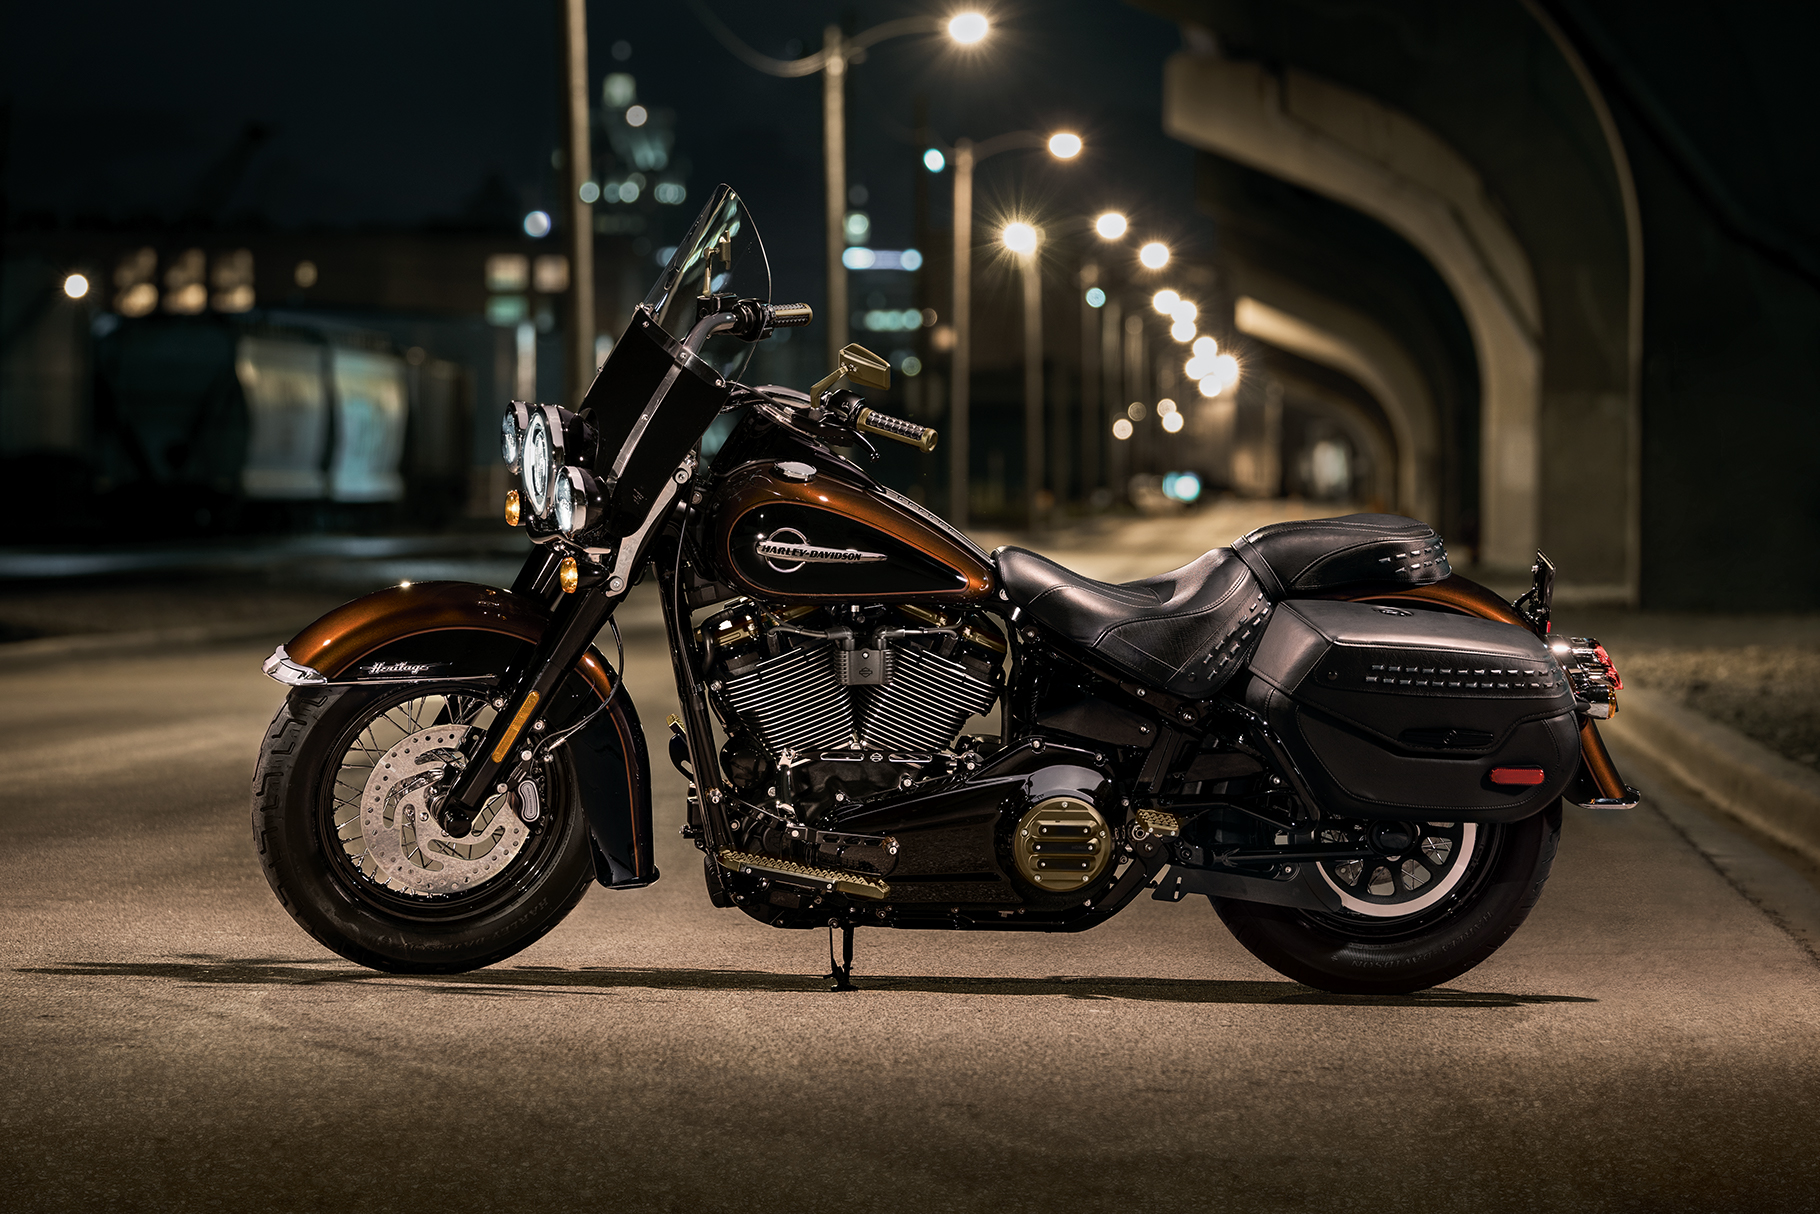 Modello Heritage Classic 2019 Harley Davidson Italia